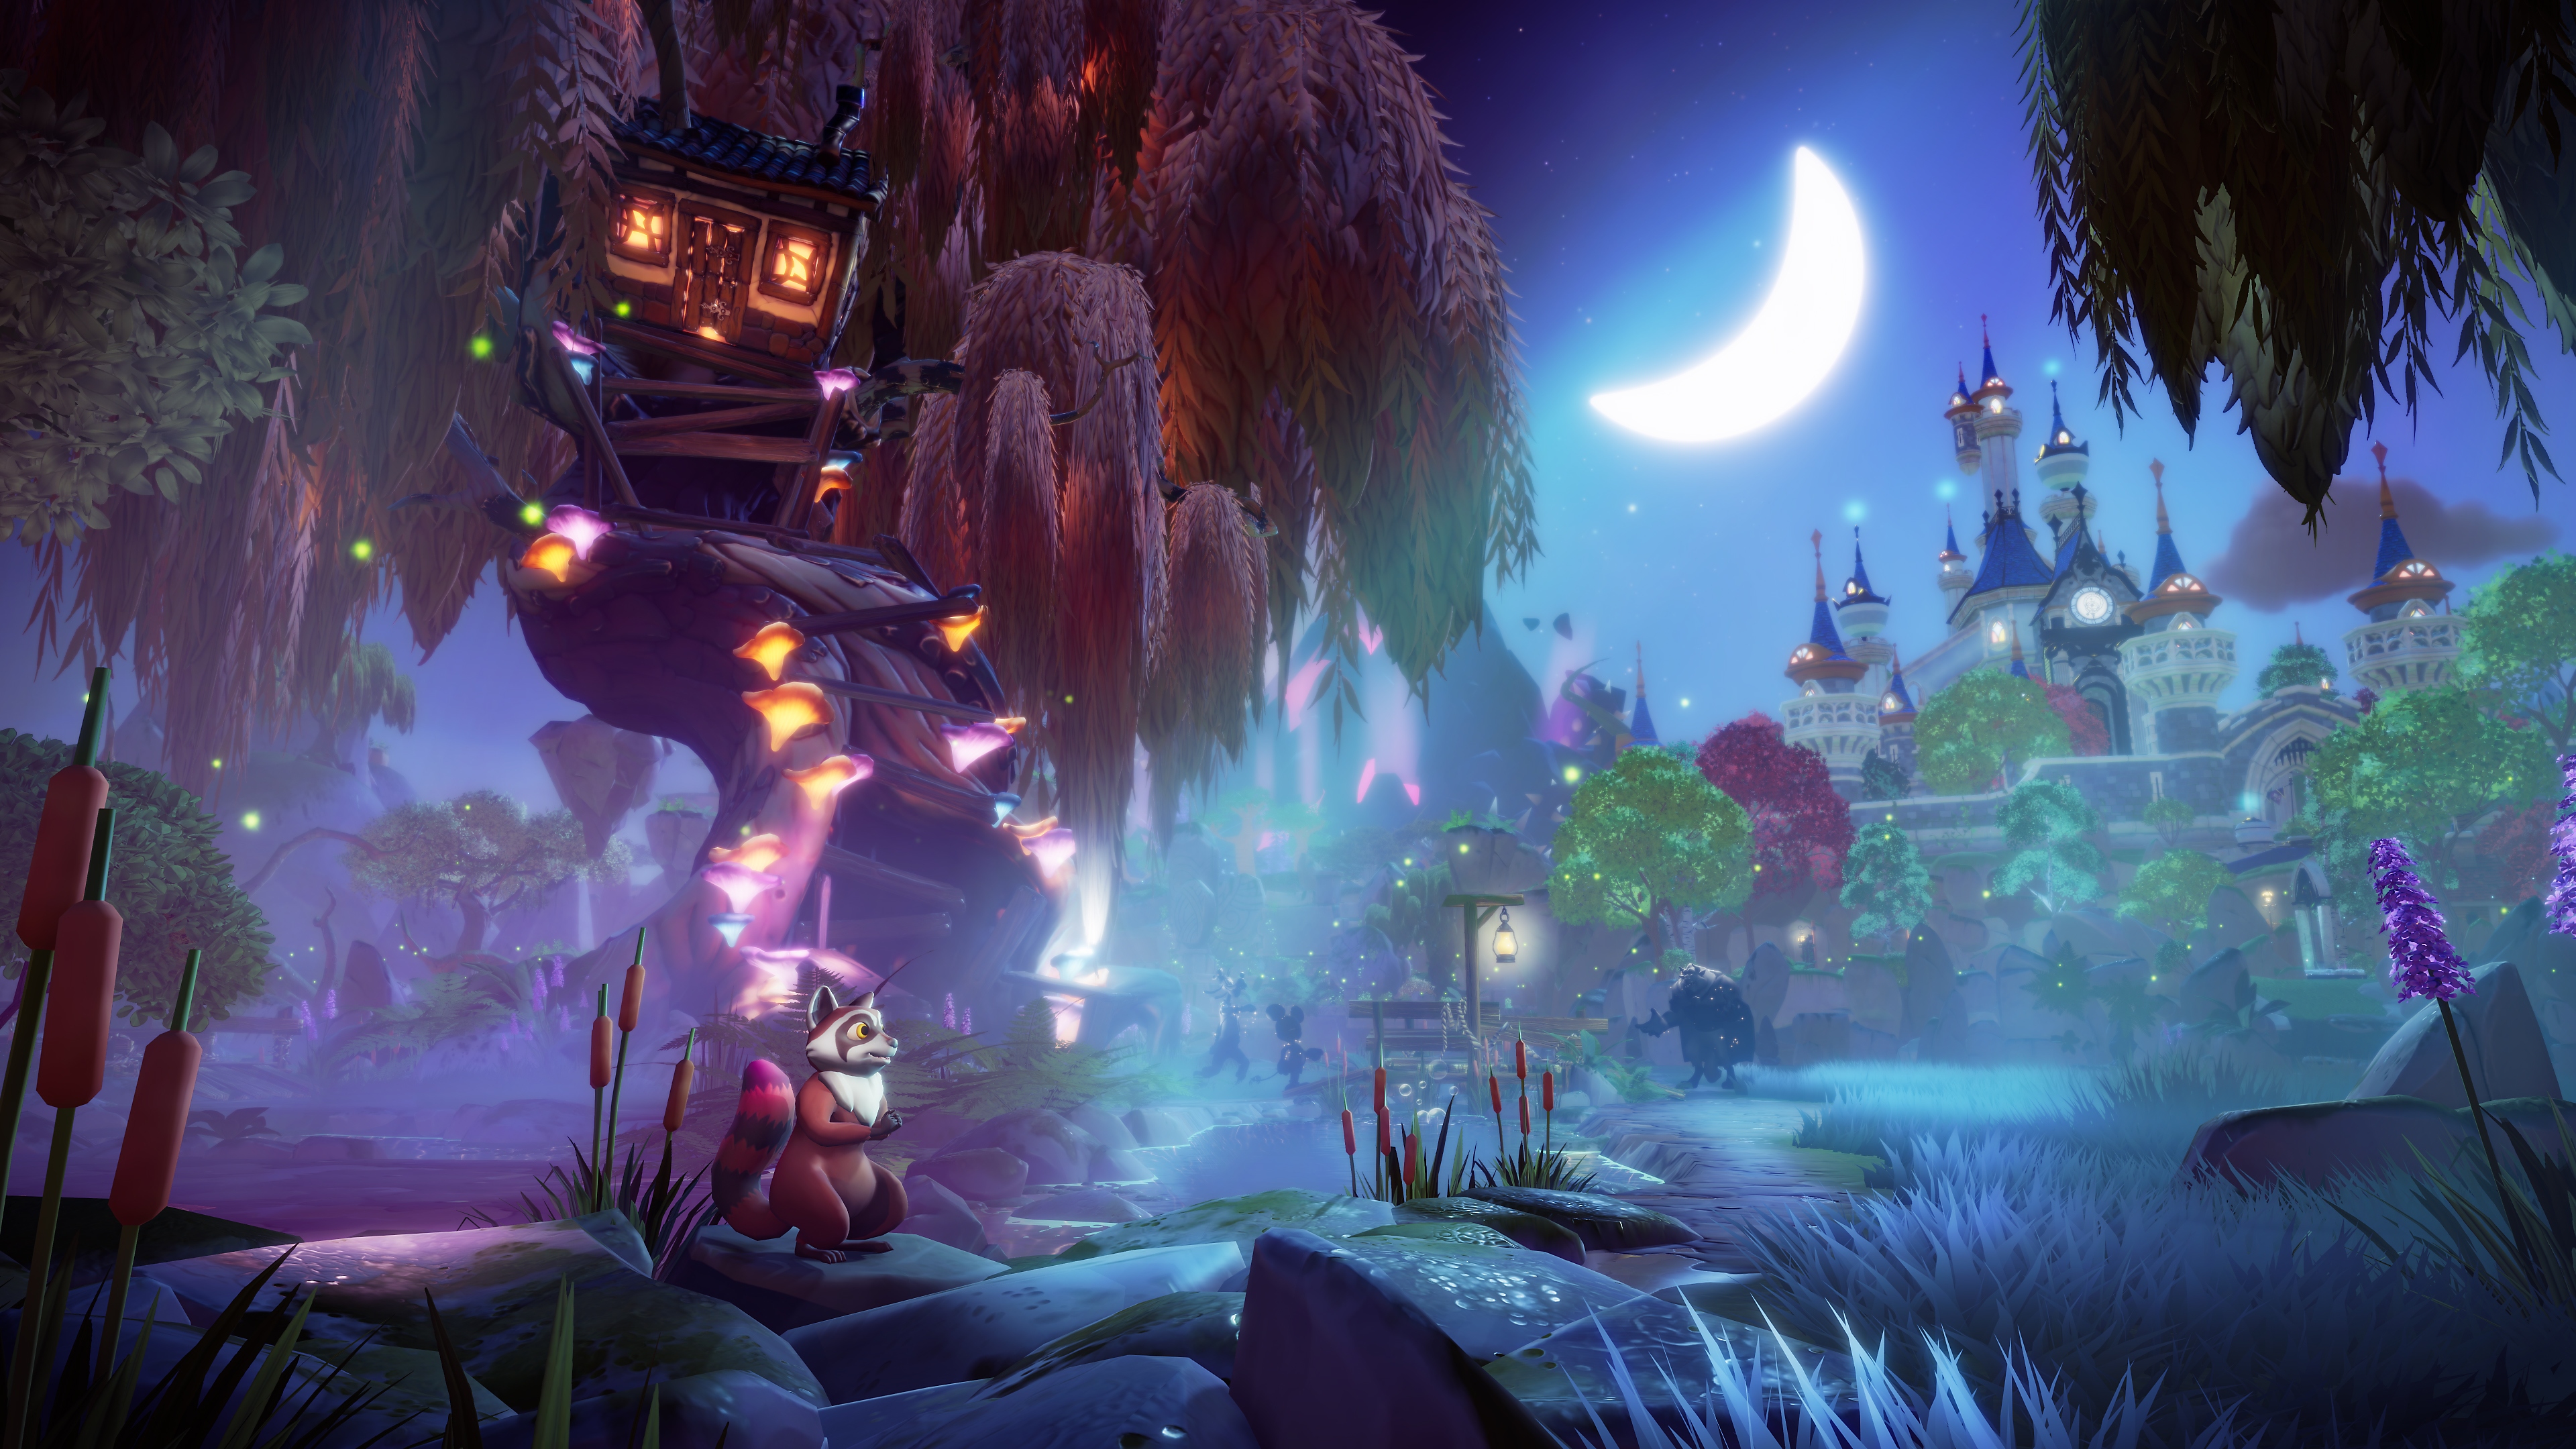 Captura de pantalla de Disney Dreamlight Valley que muestra una escena a la luz de la luna